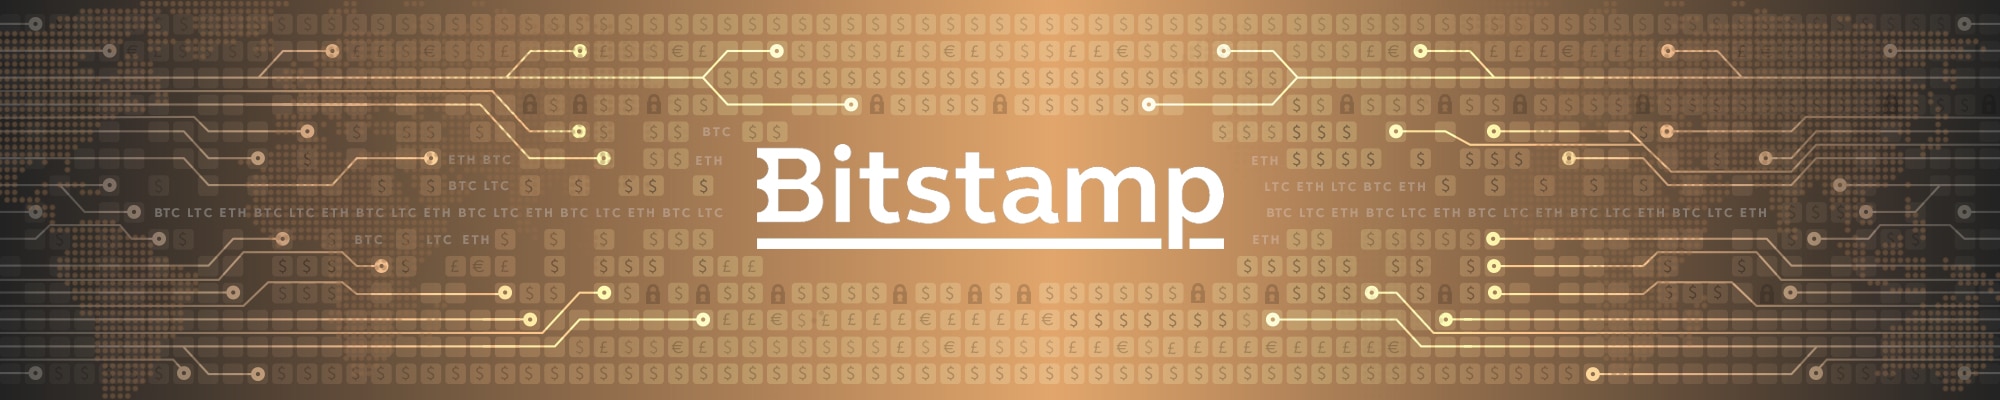 bitstamp trading app